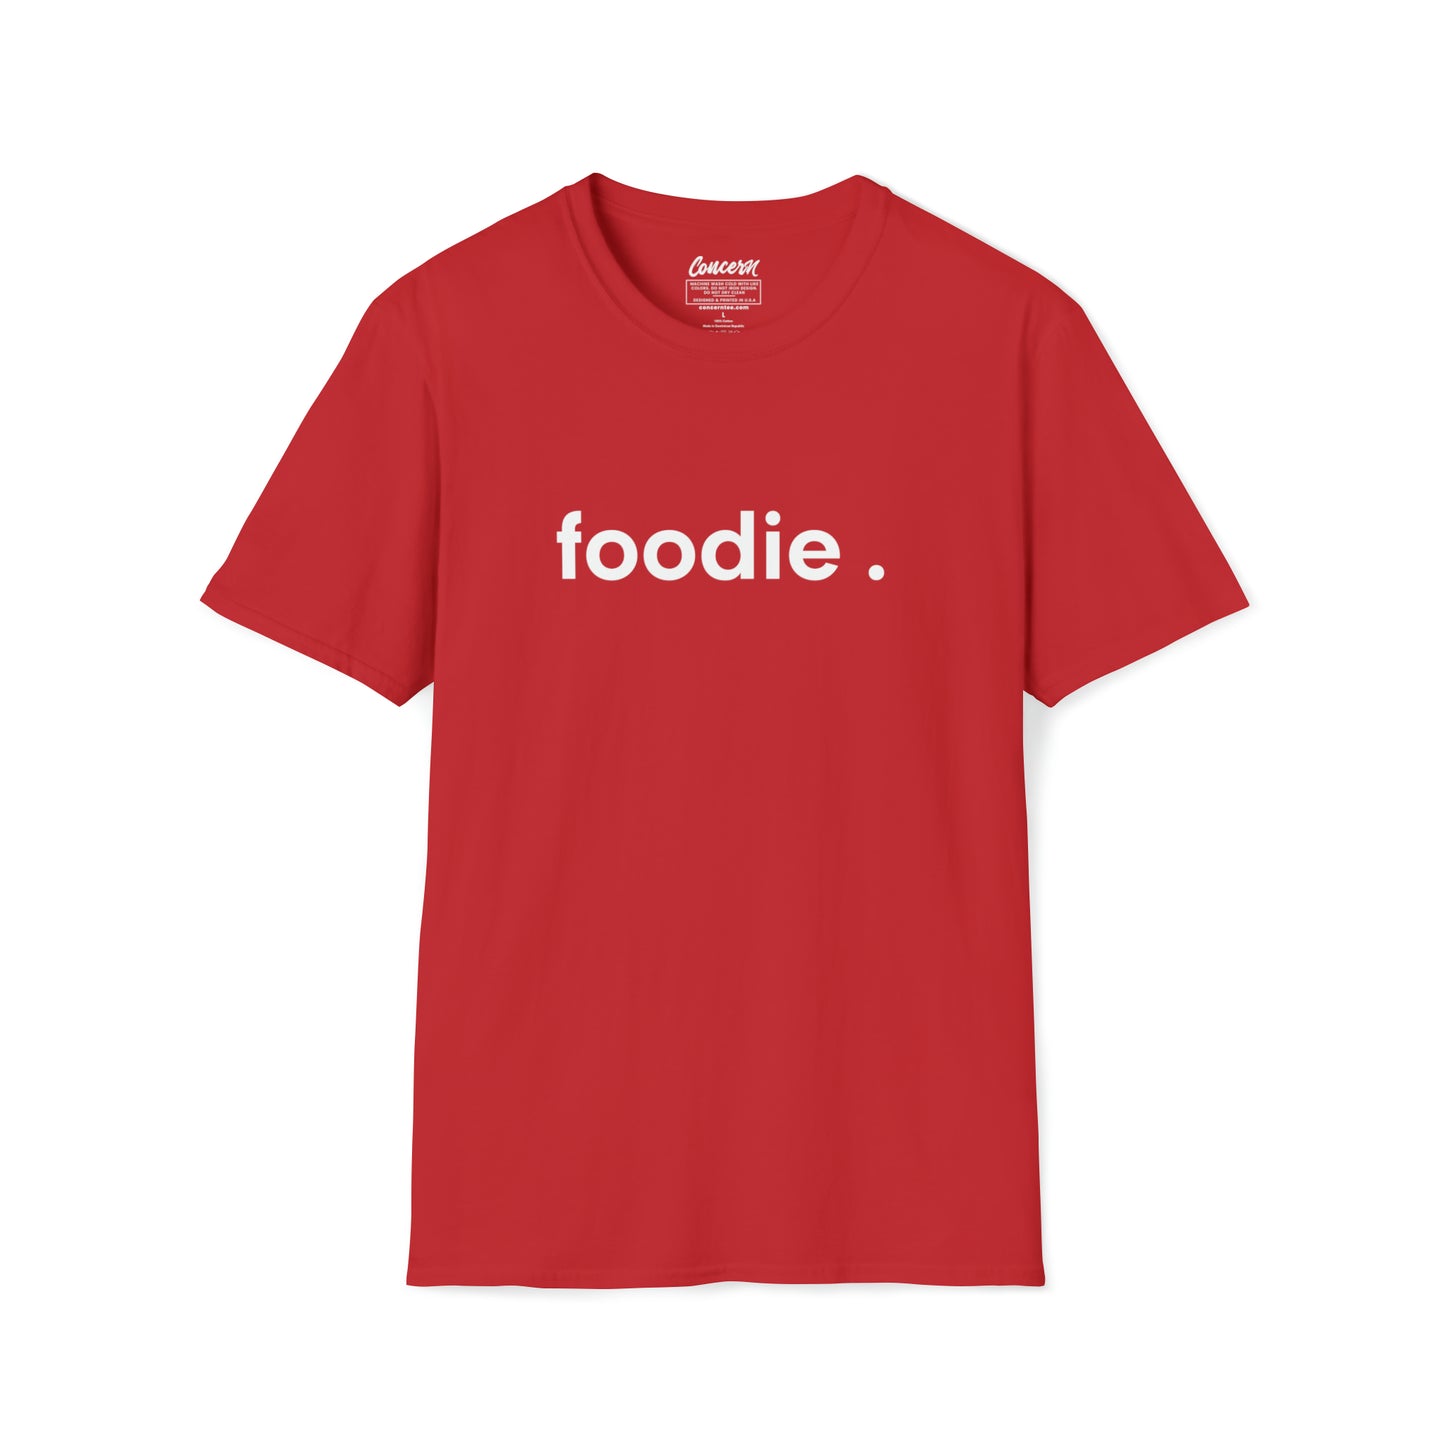 The Original Foodie T-Shirt